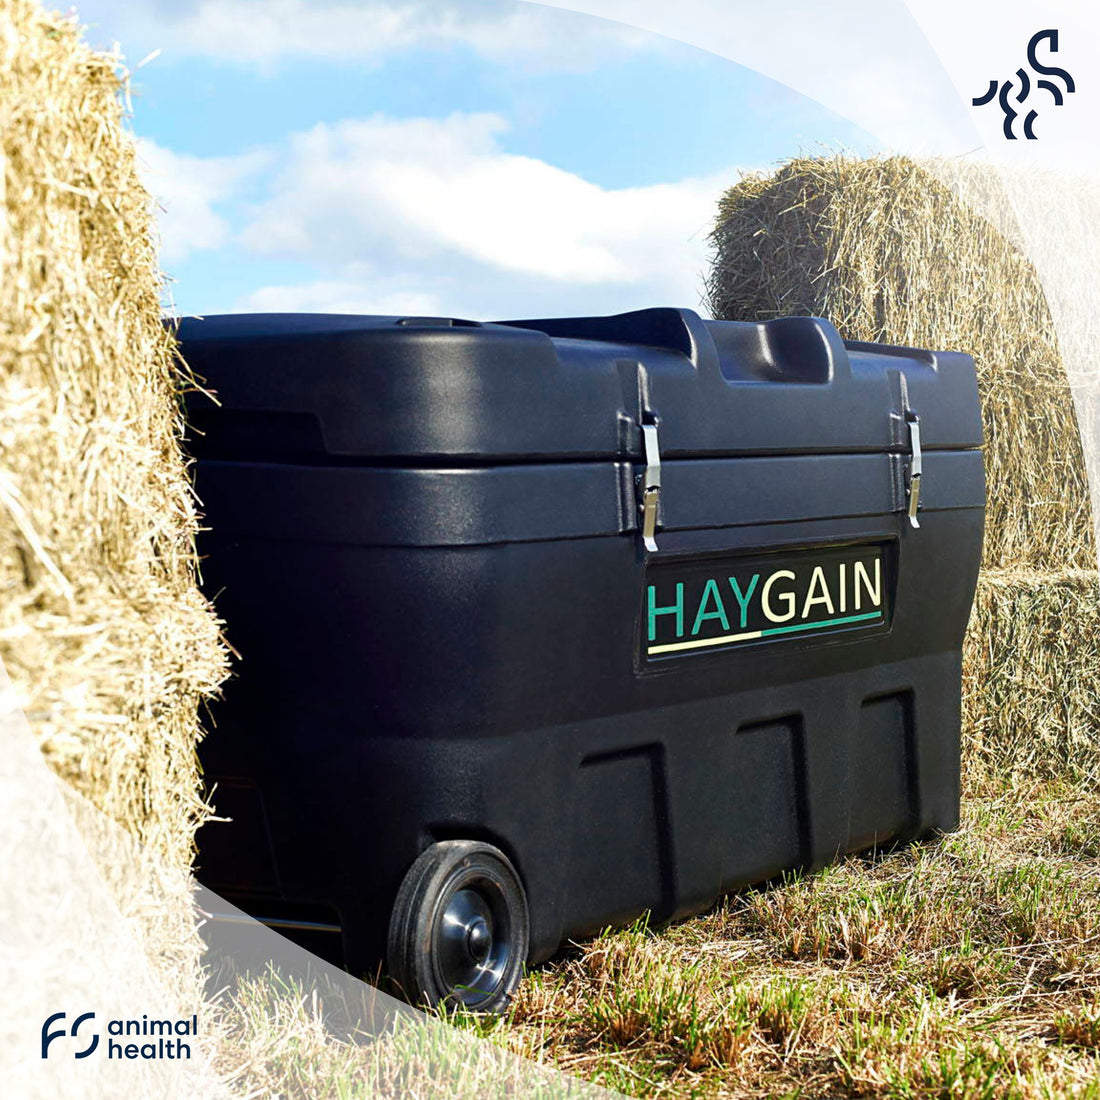 FS animal health acquires Haygain brand